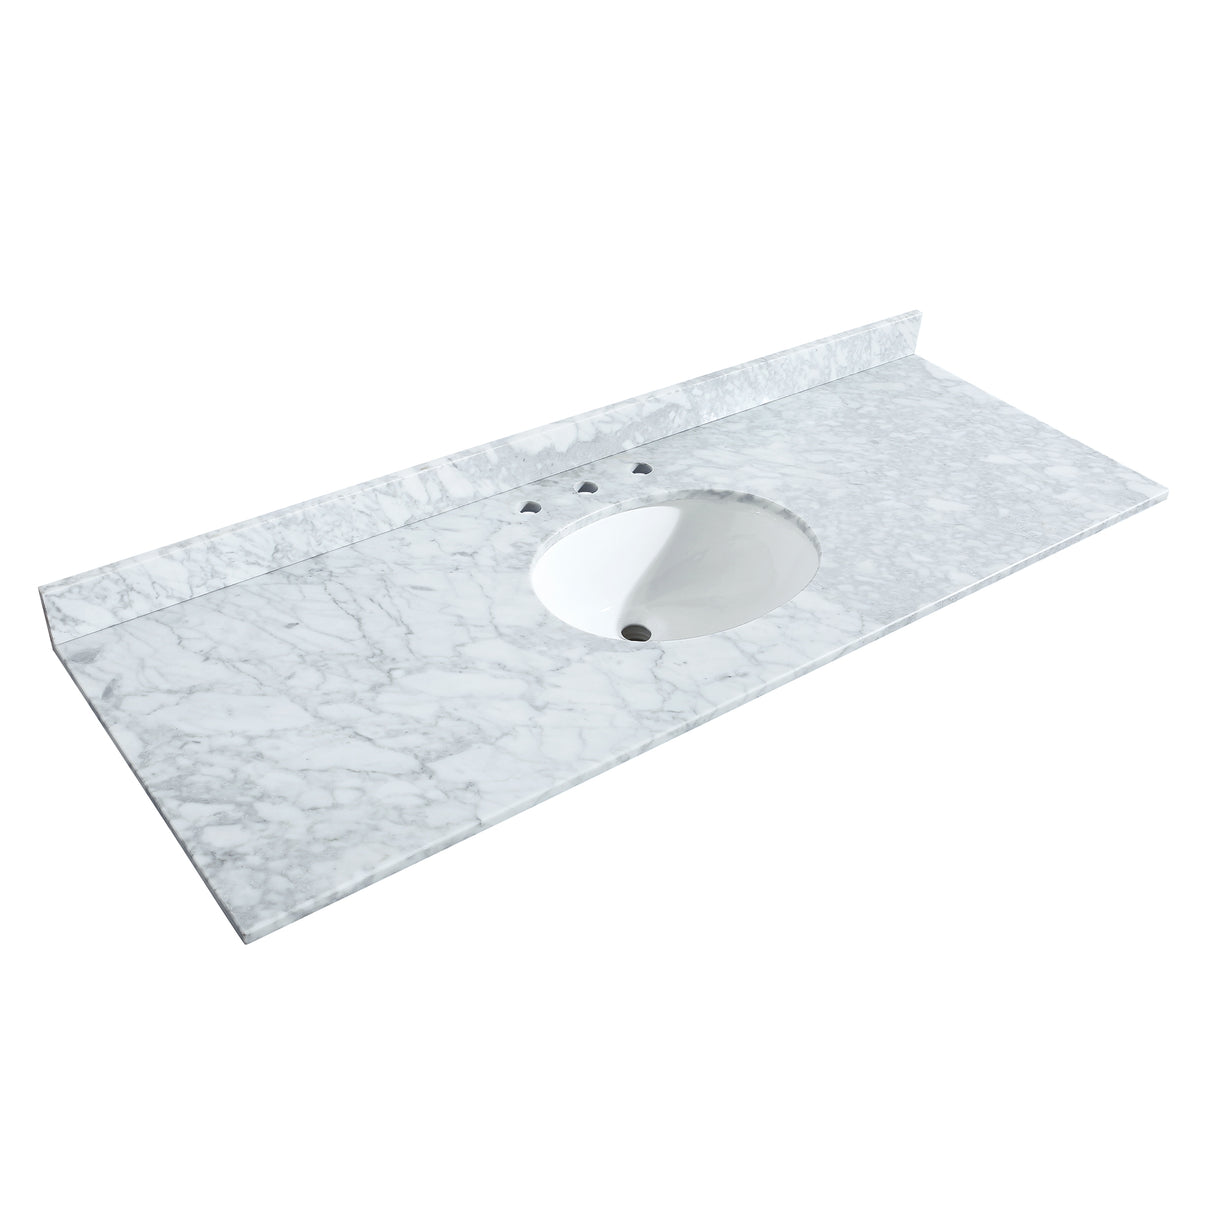 Deborah 60 Inch Single Bathroom Vanity in White White Carrara Marble Countertop Undermount Oval Sink and No Mirror